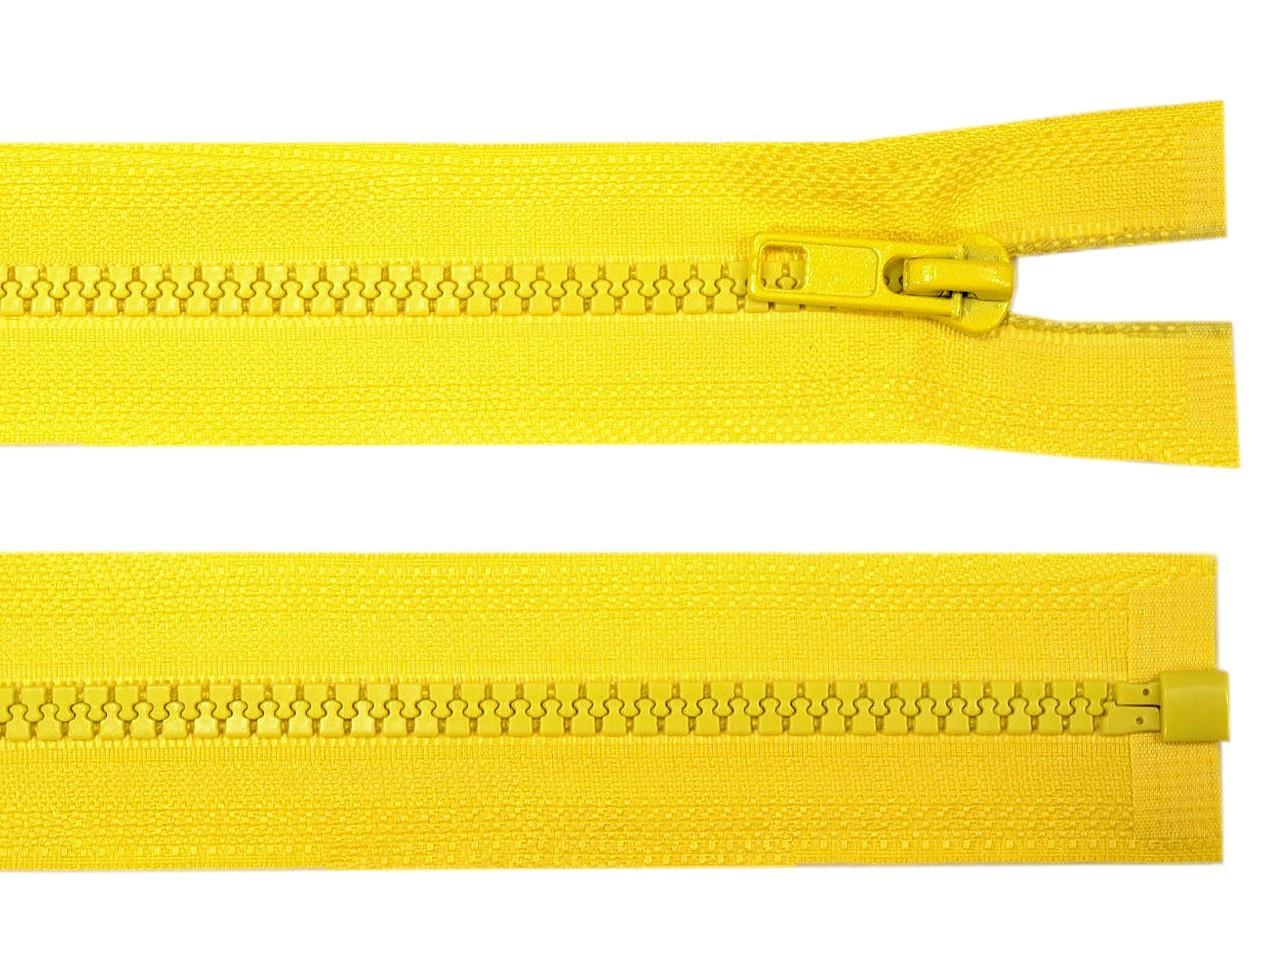 Kostěný zip No 5 délka 75 cm bundový, barva 110 žlutá